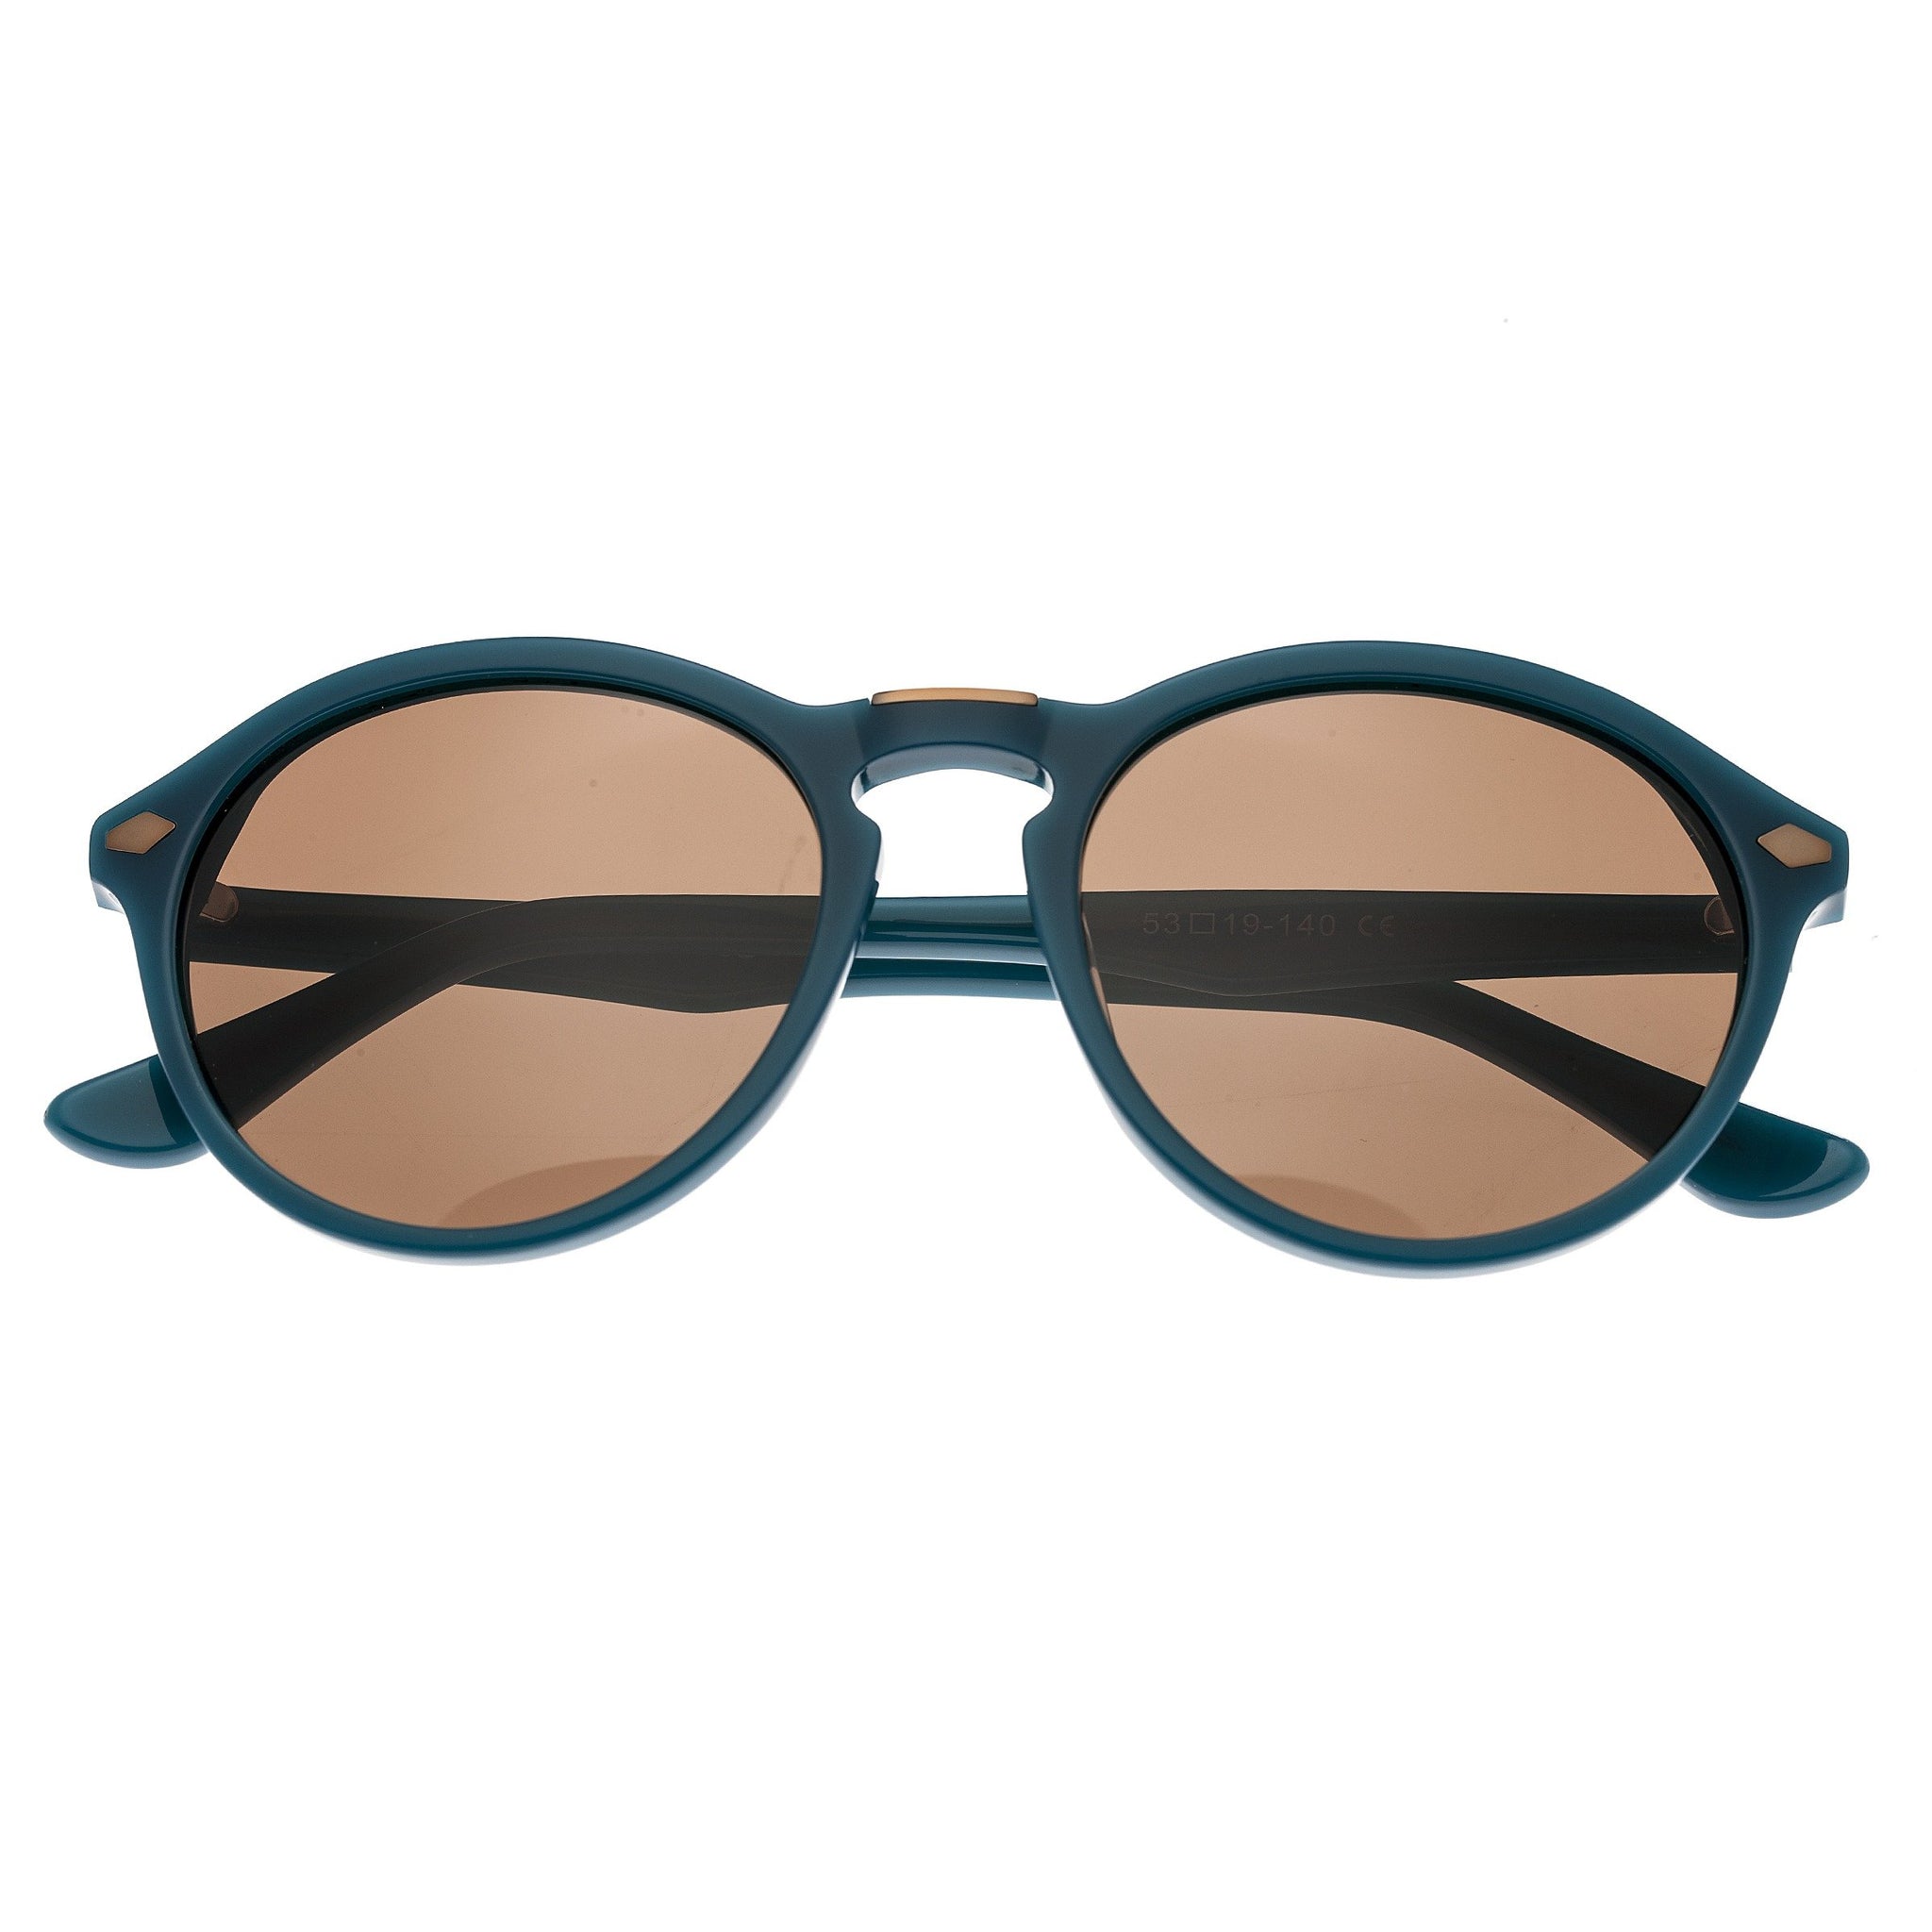 Bertha Kennedy Polarized Sunglasses - Teal/Brown - BRSBR013B